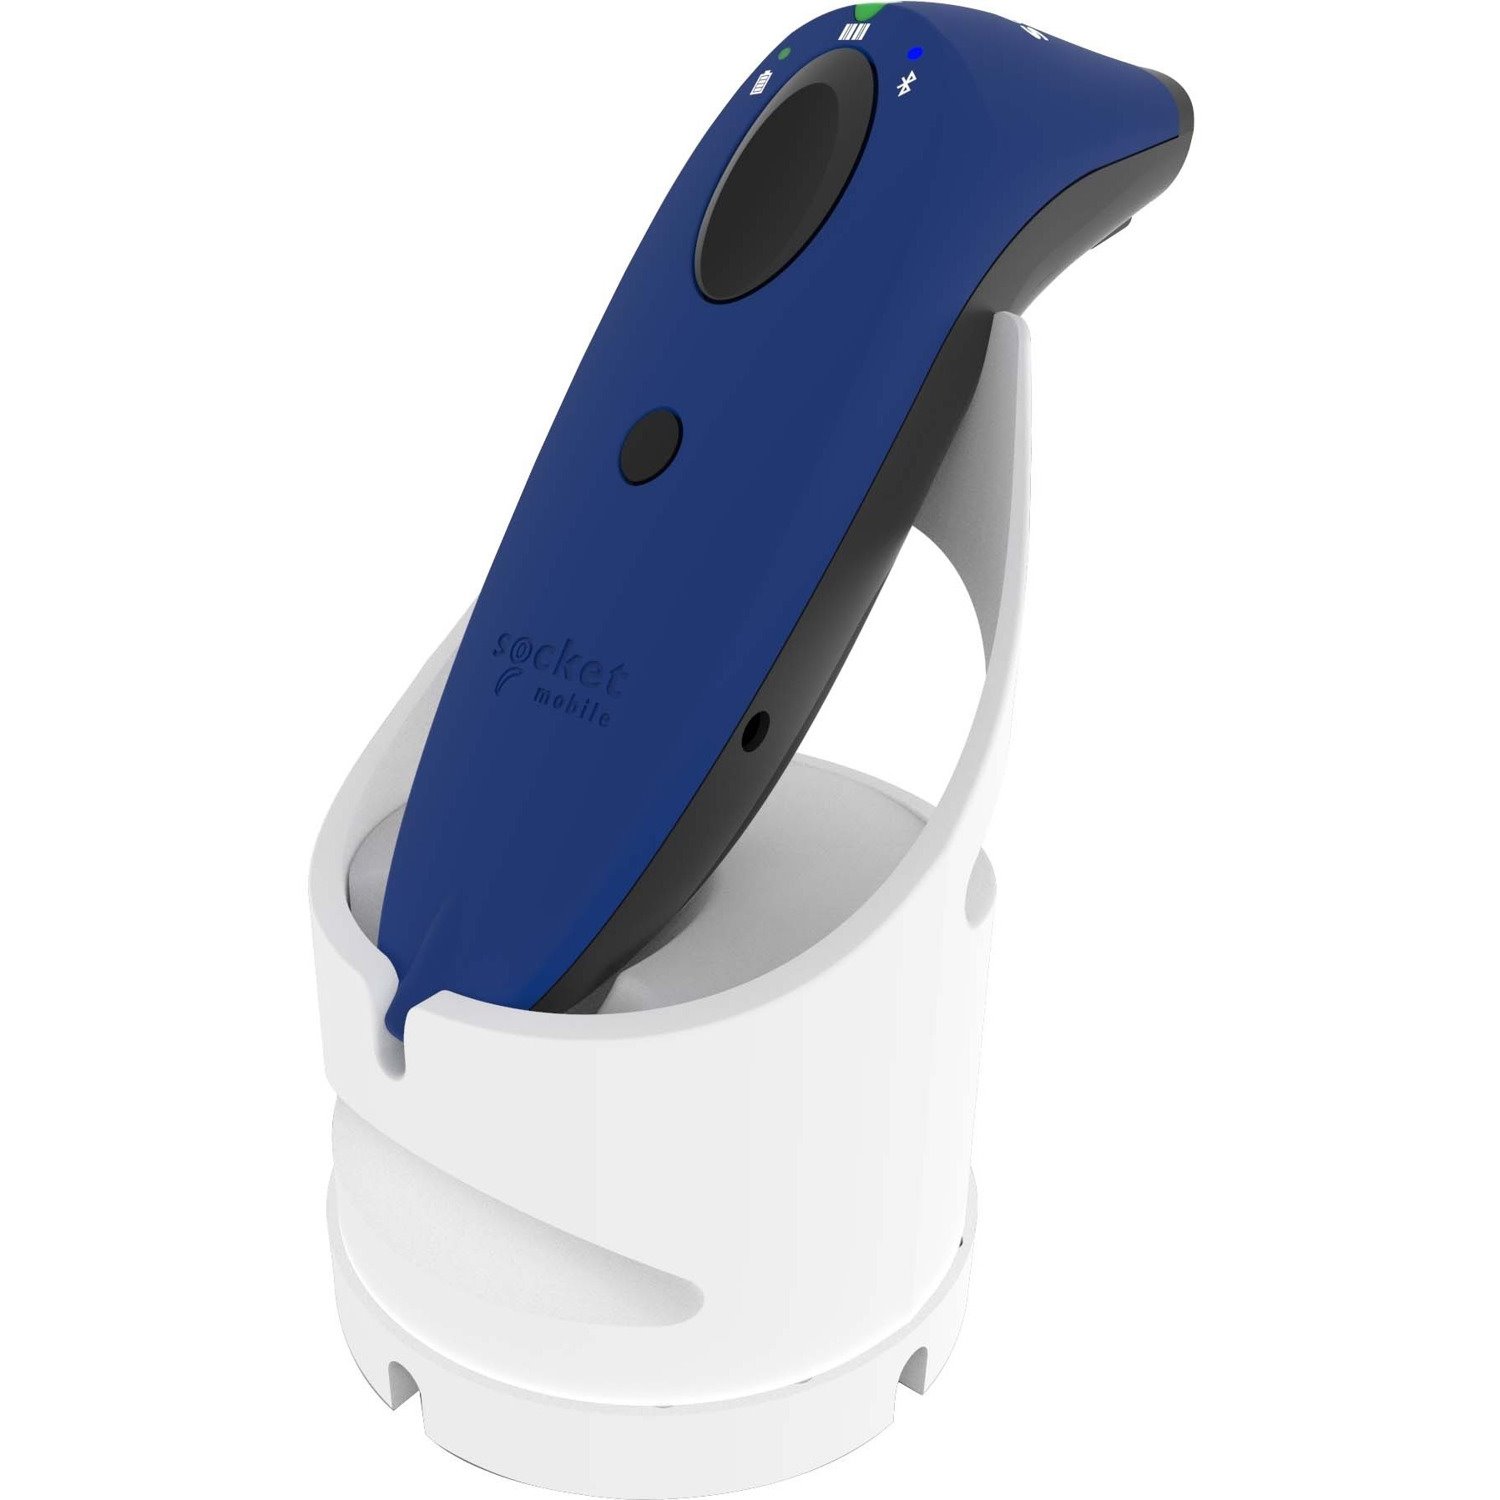 Socket Mobile SocketScan S730 Handheld Barcode Scanner - Wireless Connectivity - Blue, White